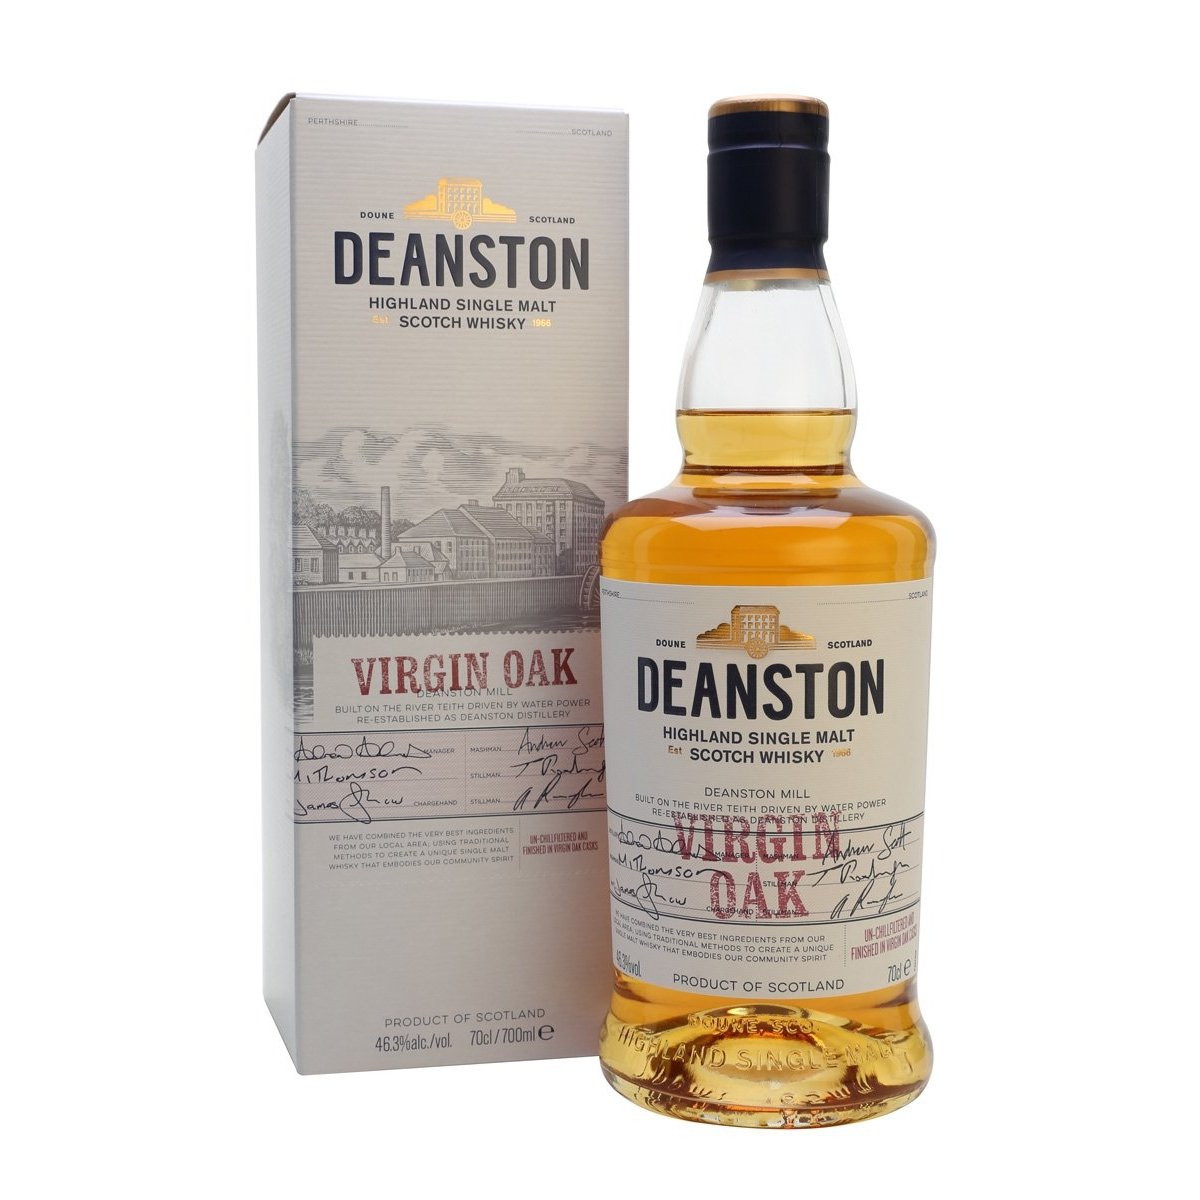 Deanston VIRGIN OAK Highland Single Malt Scotch Whisky 46,3% Vol. 0,7l in Giftbox